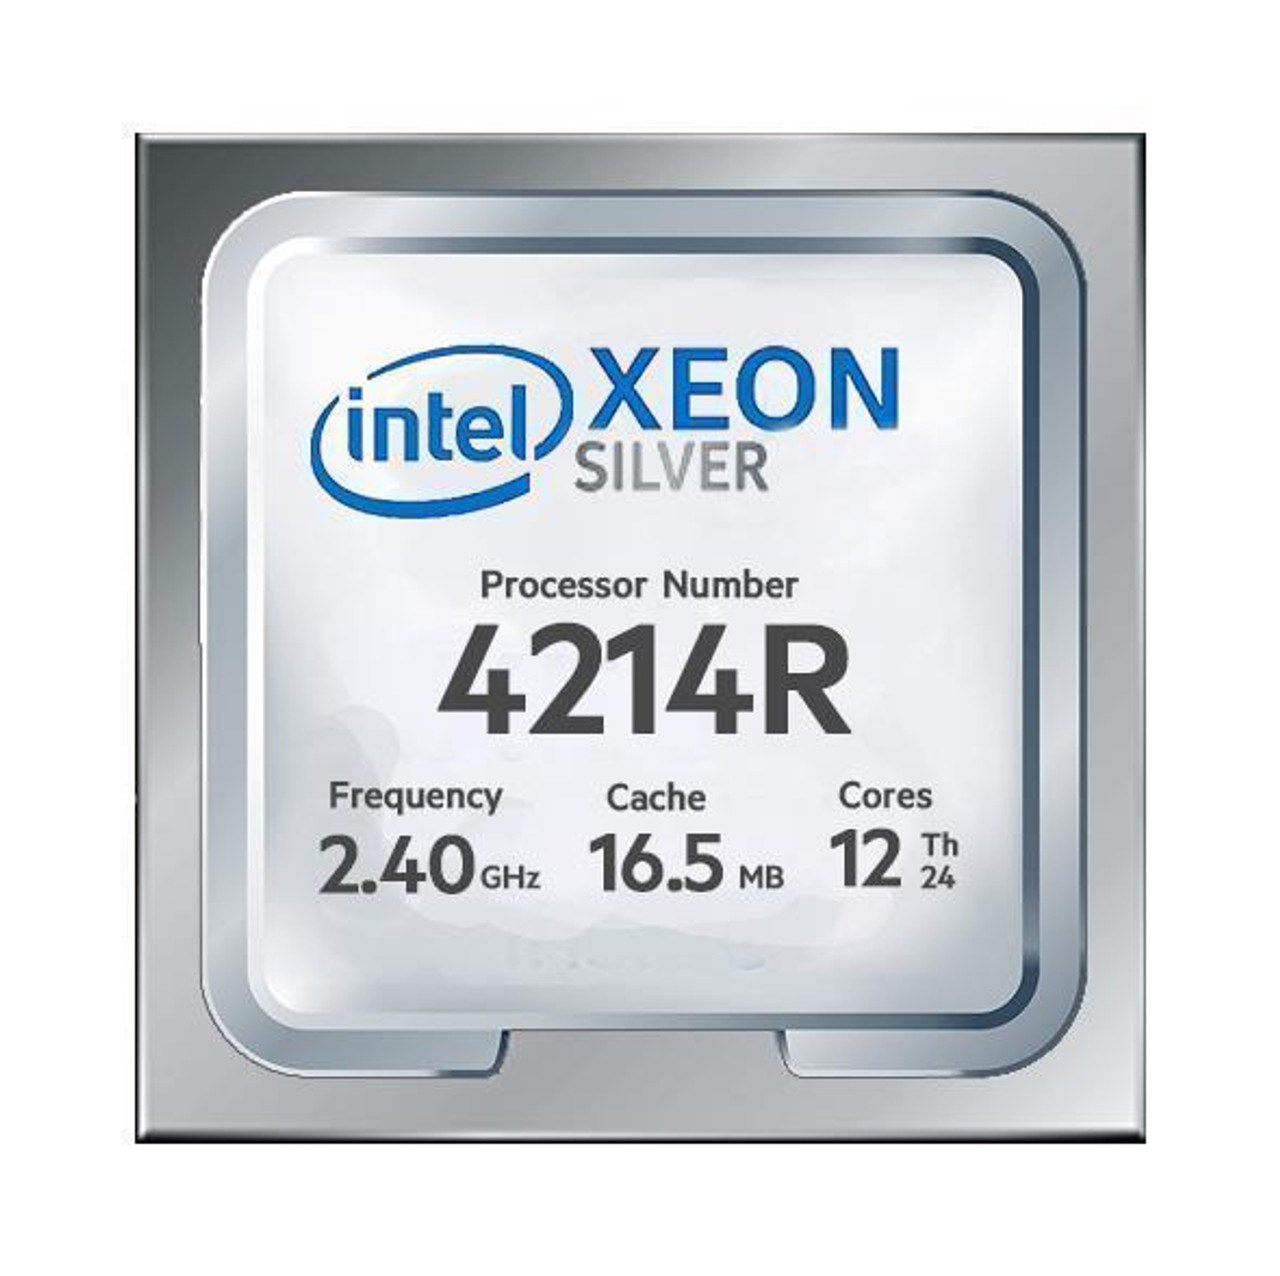 Dell CPU Kit Intel Xeon Silver 12 Core Processor 4214r 2.40GHz 16.5mb Cache Tdp 100w Fclga3647 For Dell Precision 7820 Tower Workstation ( T7820 ) (